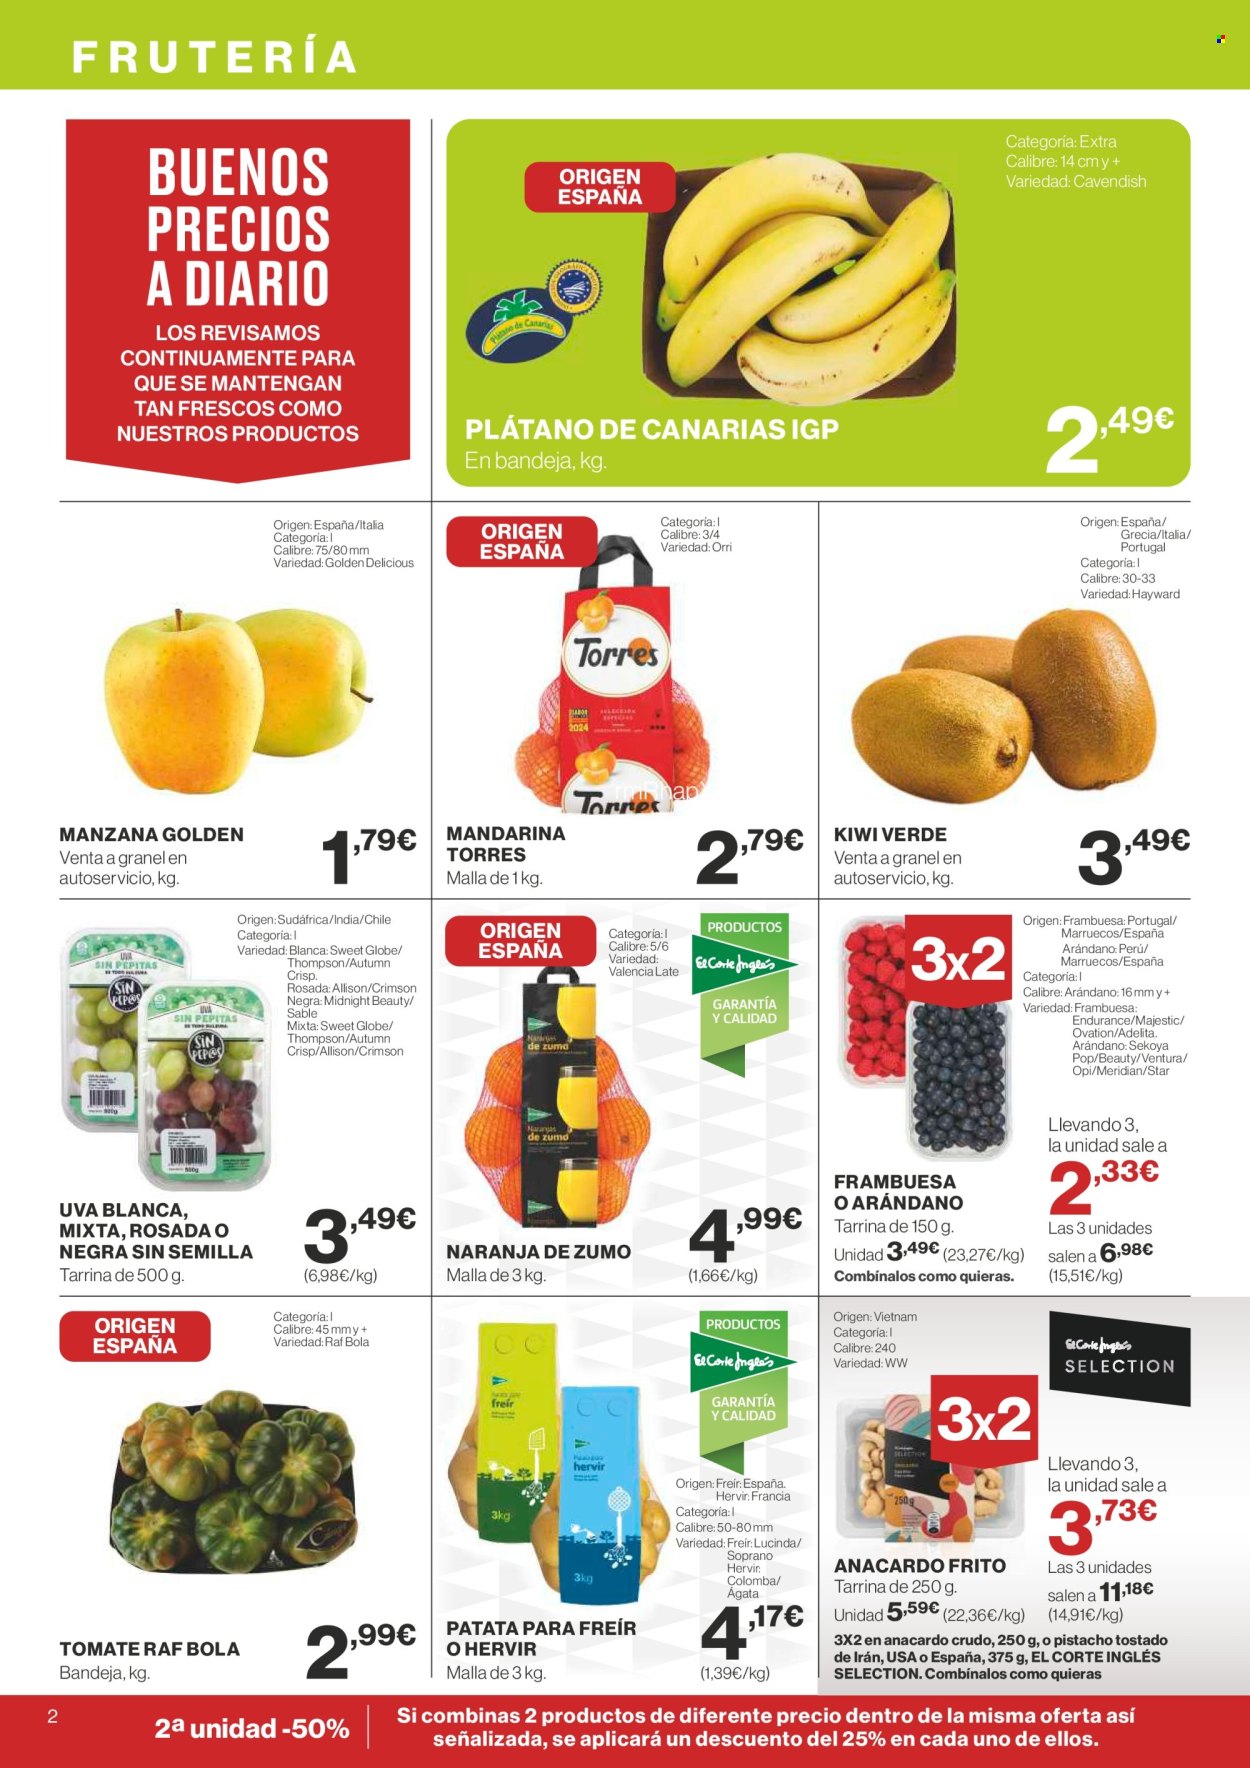 thumbnail - Folleto actual Supercor supermercados - 25/04/24 - 08/05/24 - Ventas - manzanas, naranja, uva blanca, tomate, patatas, anacardos, pistacho. Página 2.